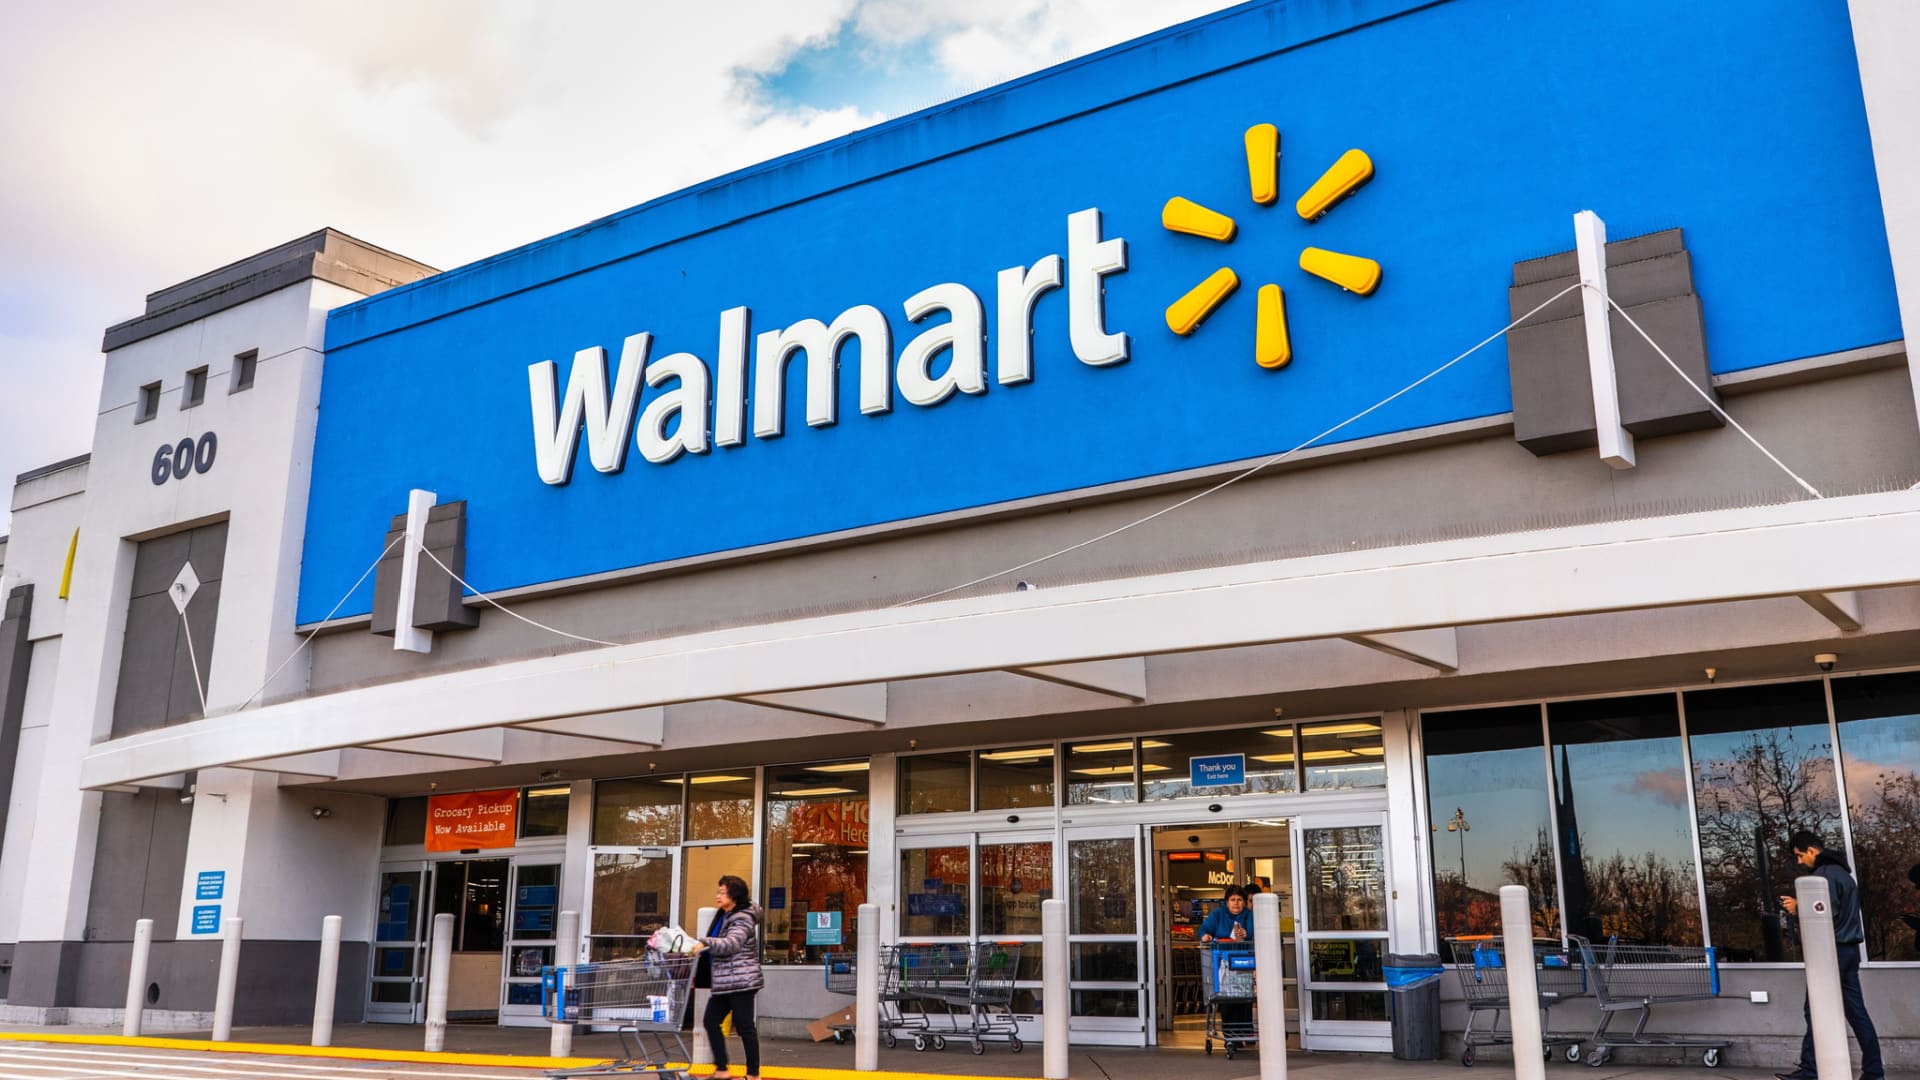 Walmart is expanding their self-service Marketplace platform